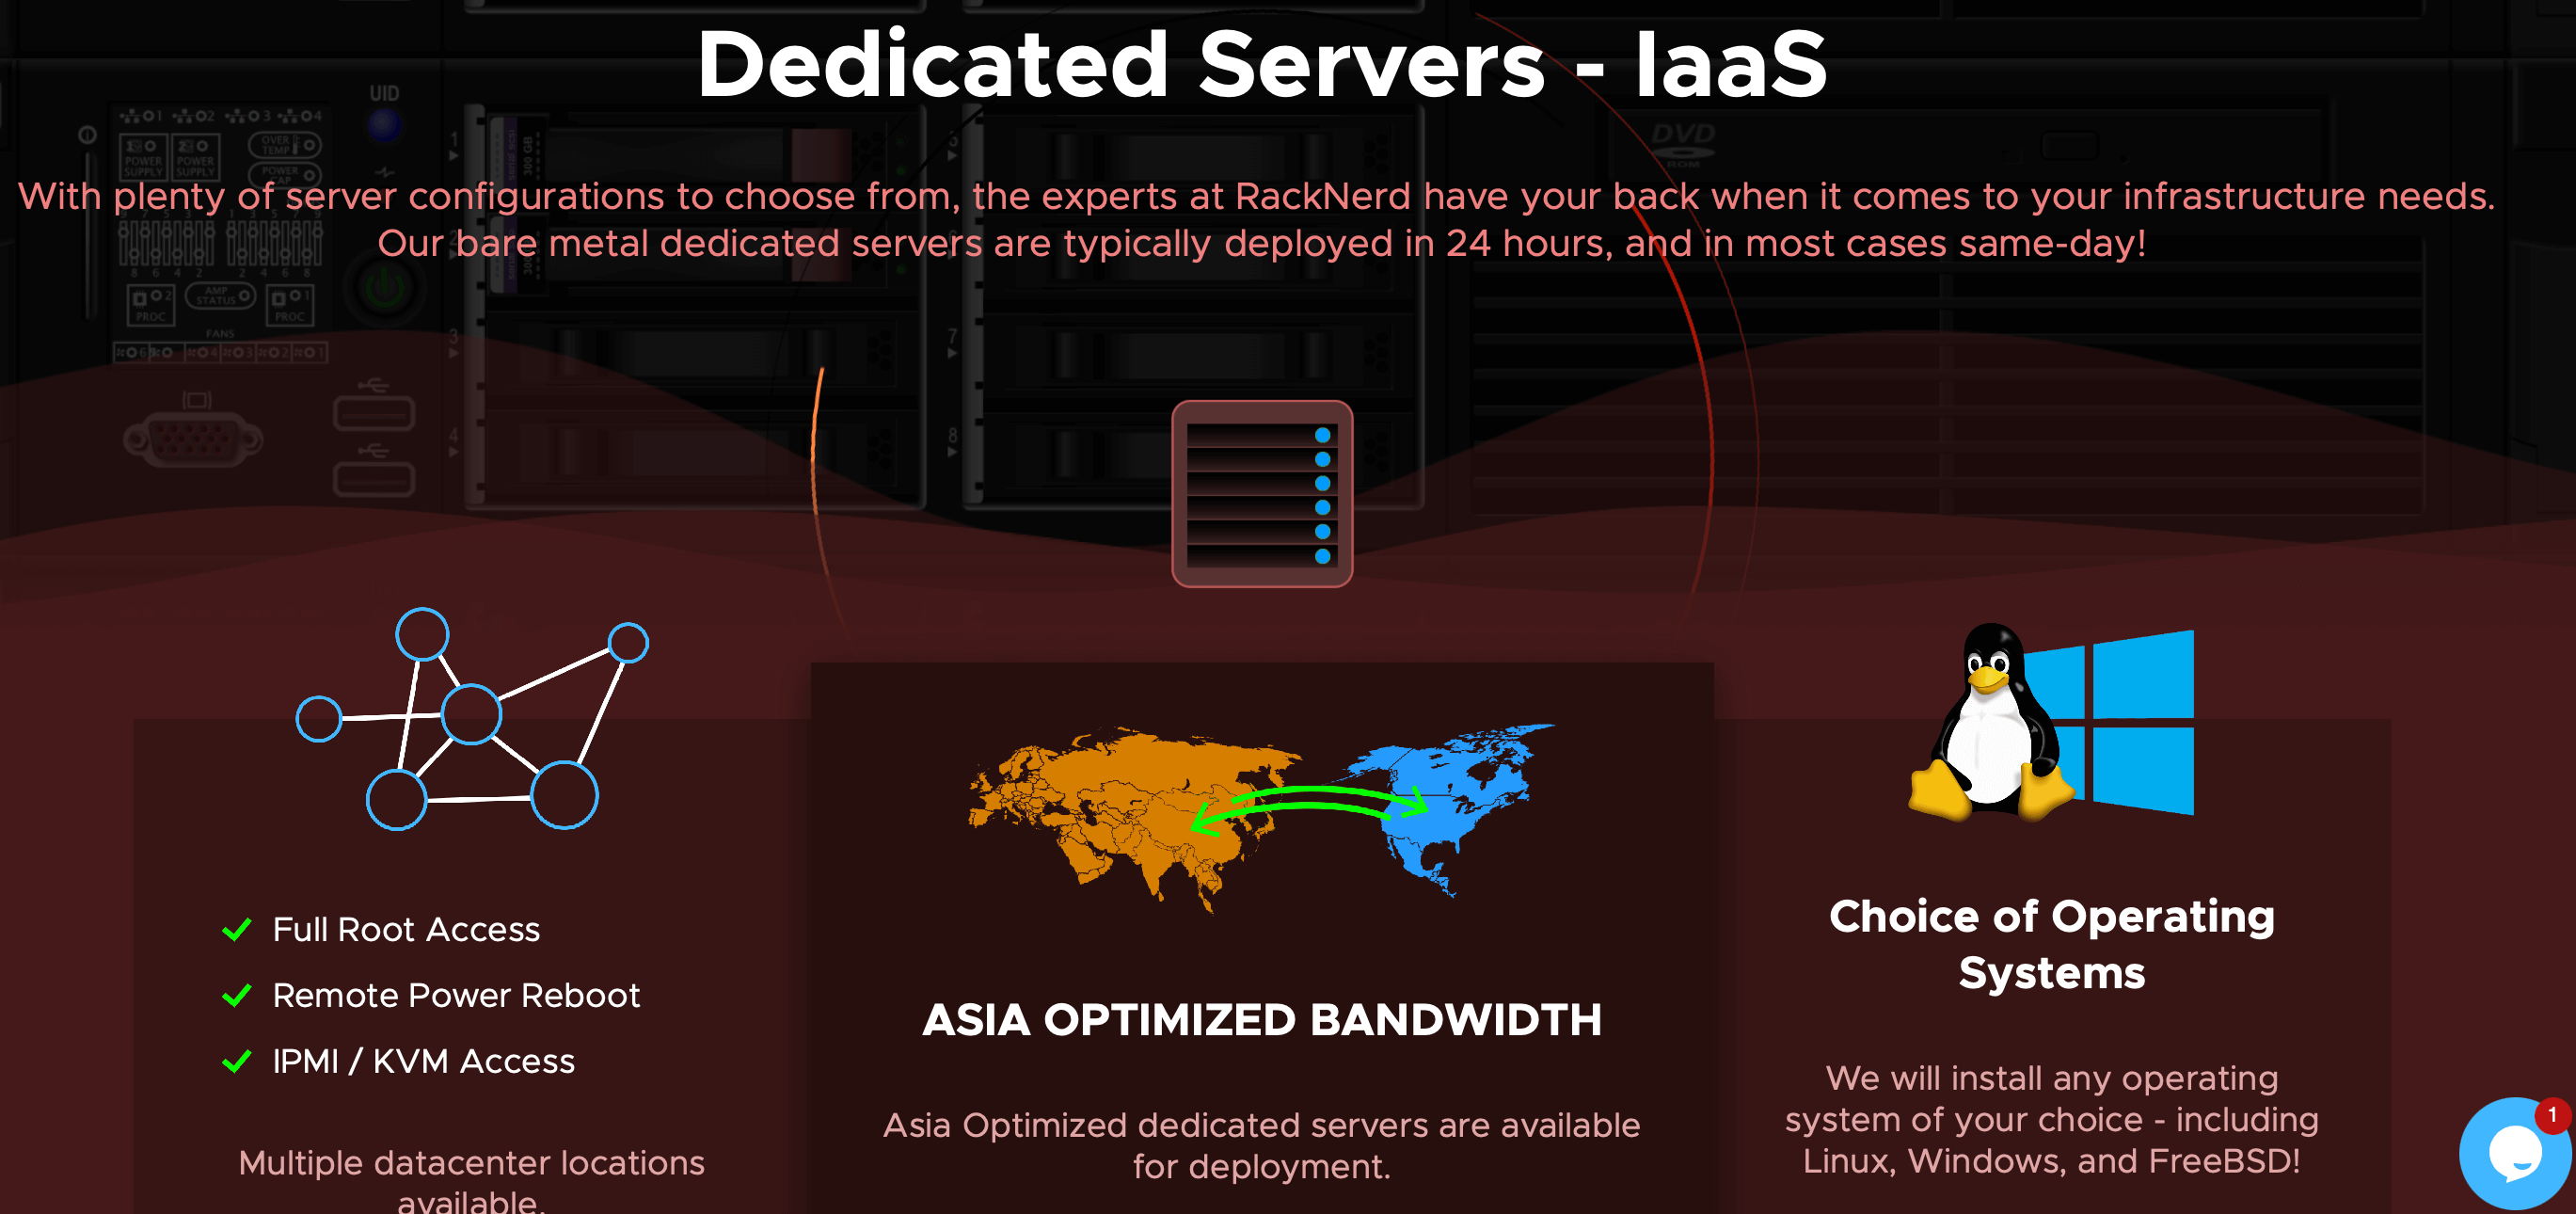 How to set up a dedicated server on RackNerd